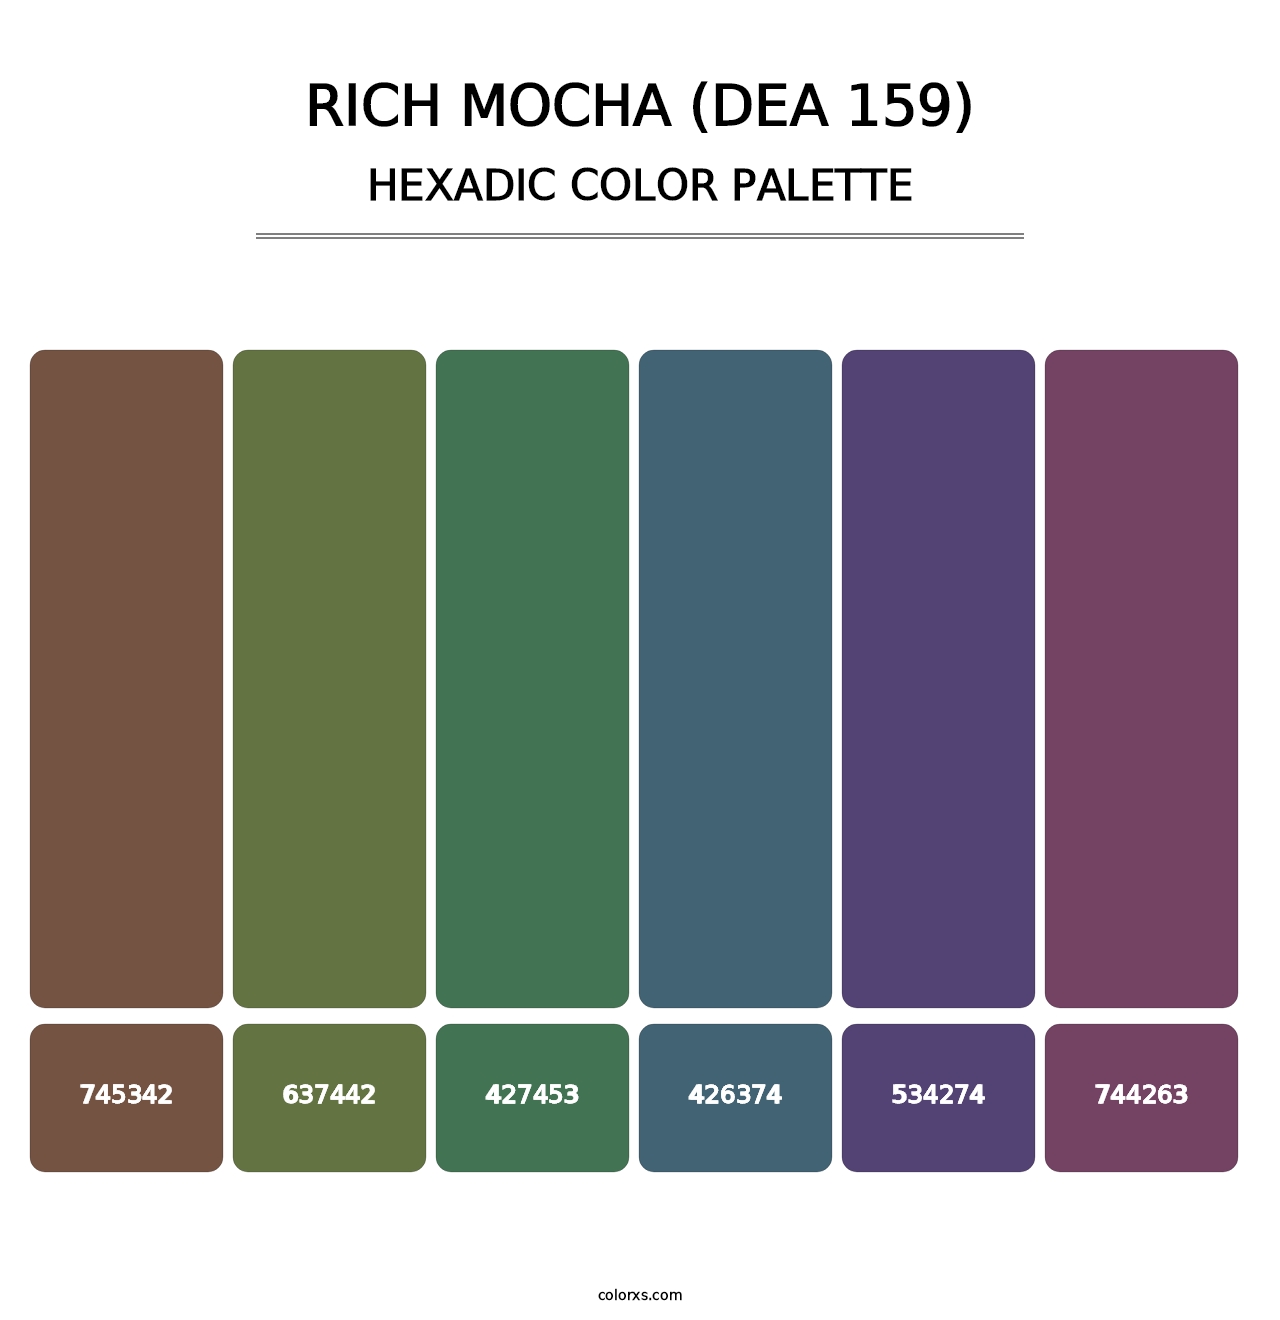 Rich Mocha (DEA 159) - Hexadic Color Palette